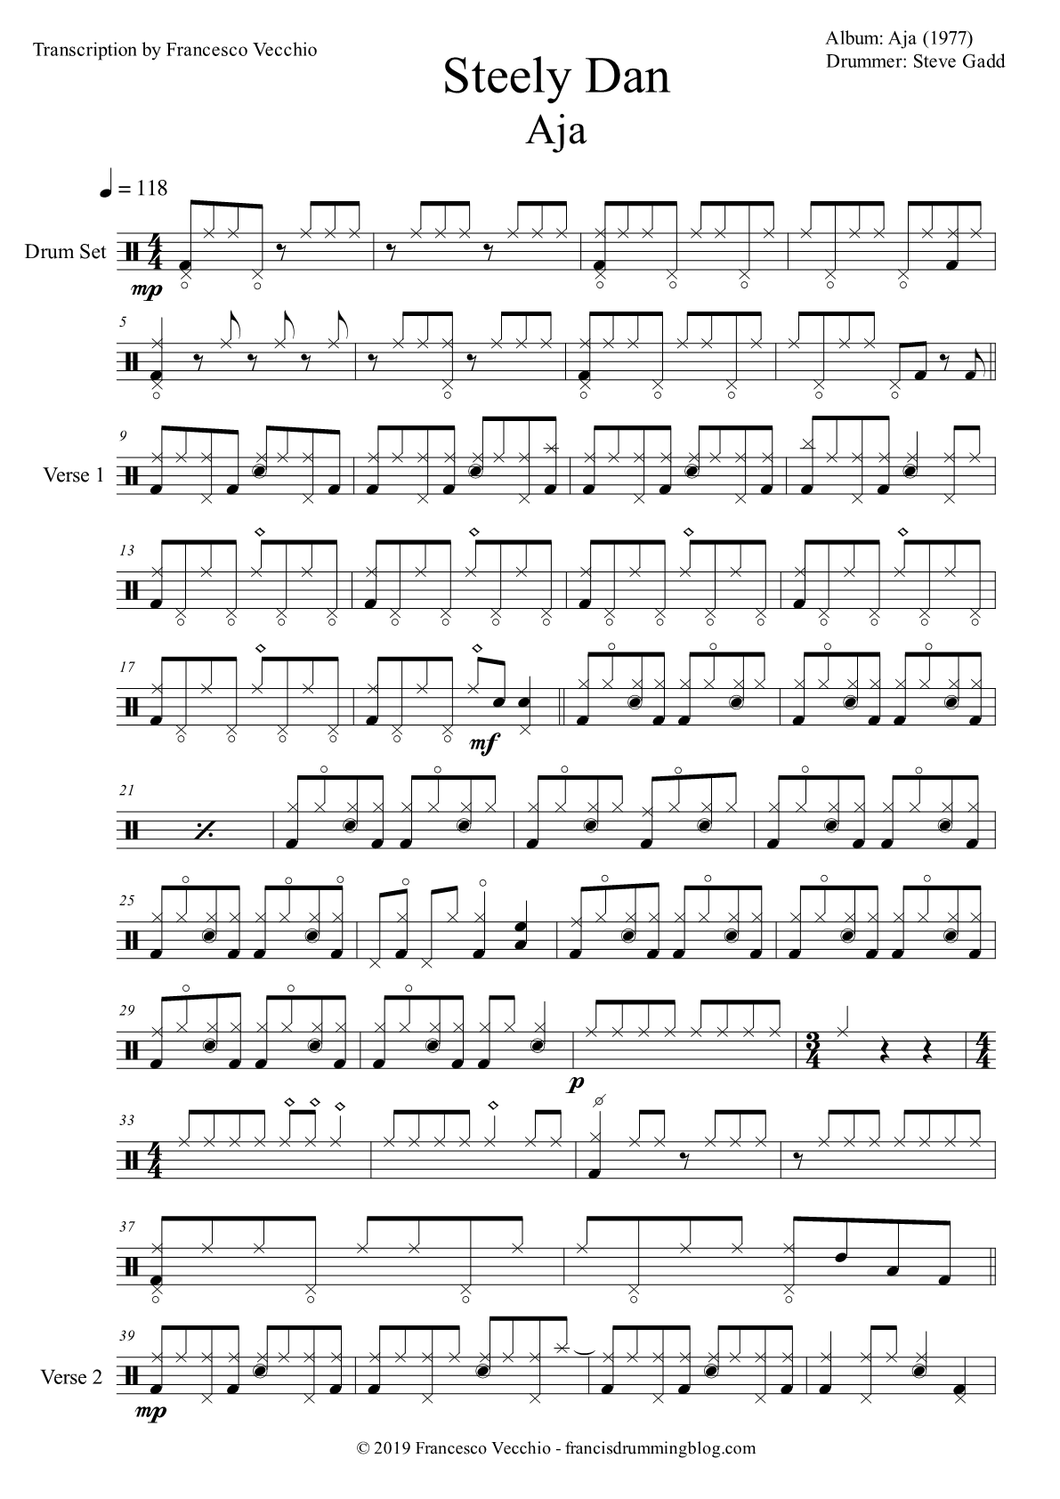 Aja - Steely Dan - Full Drum Transcription / Drum Sheet Music - FrancisDrummingBlog.com